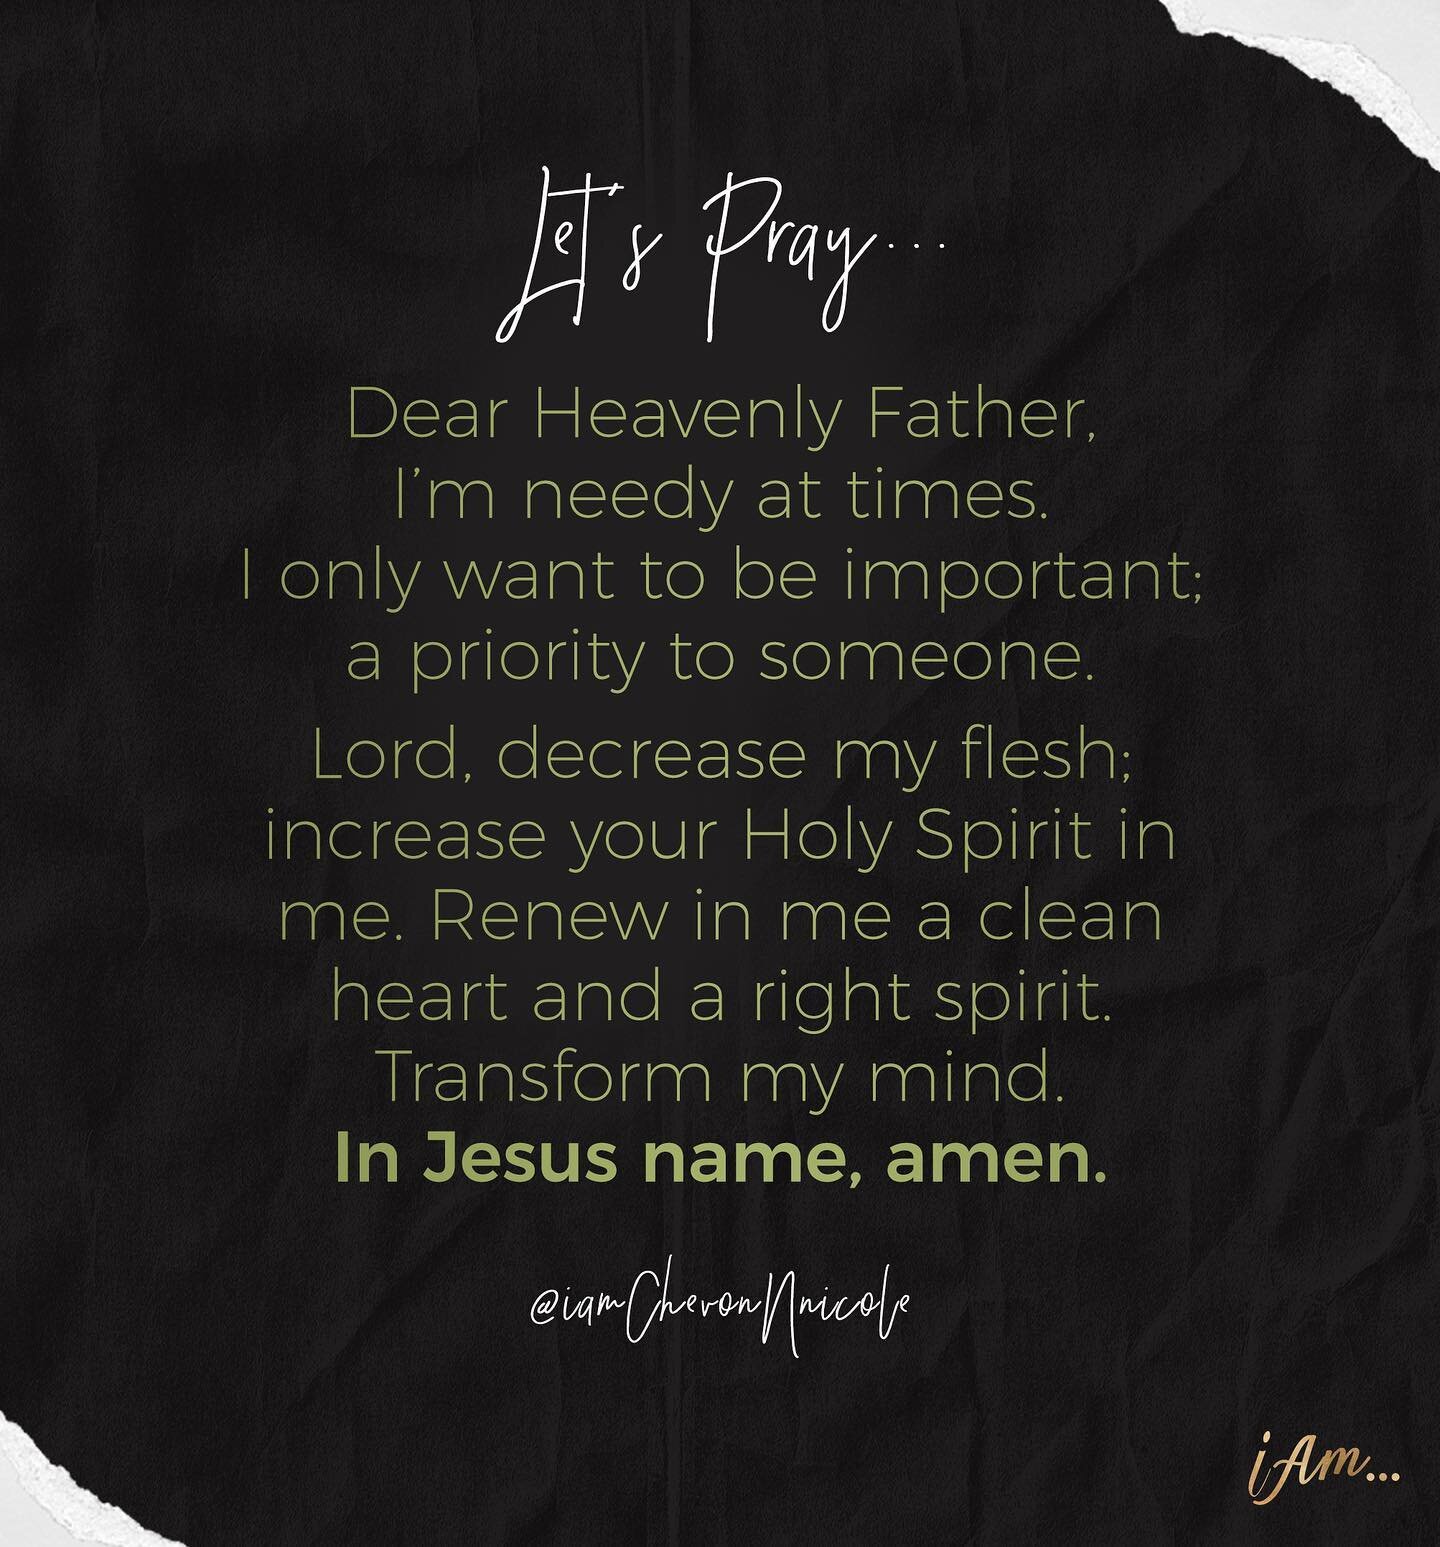 Hey ladies, Join me for a Mid-day prayer. 🙏🏾💚✨

@iamchevonnicole
www.iamchevonnicole.com